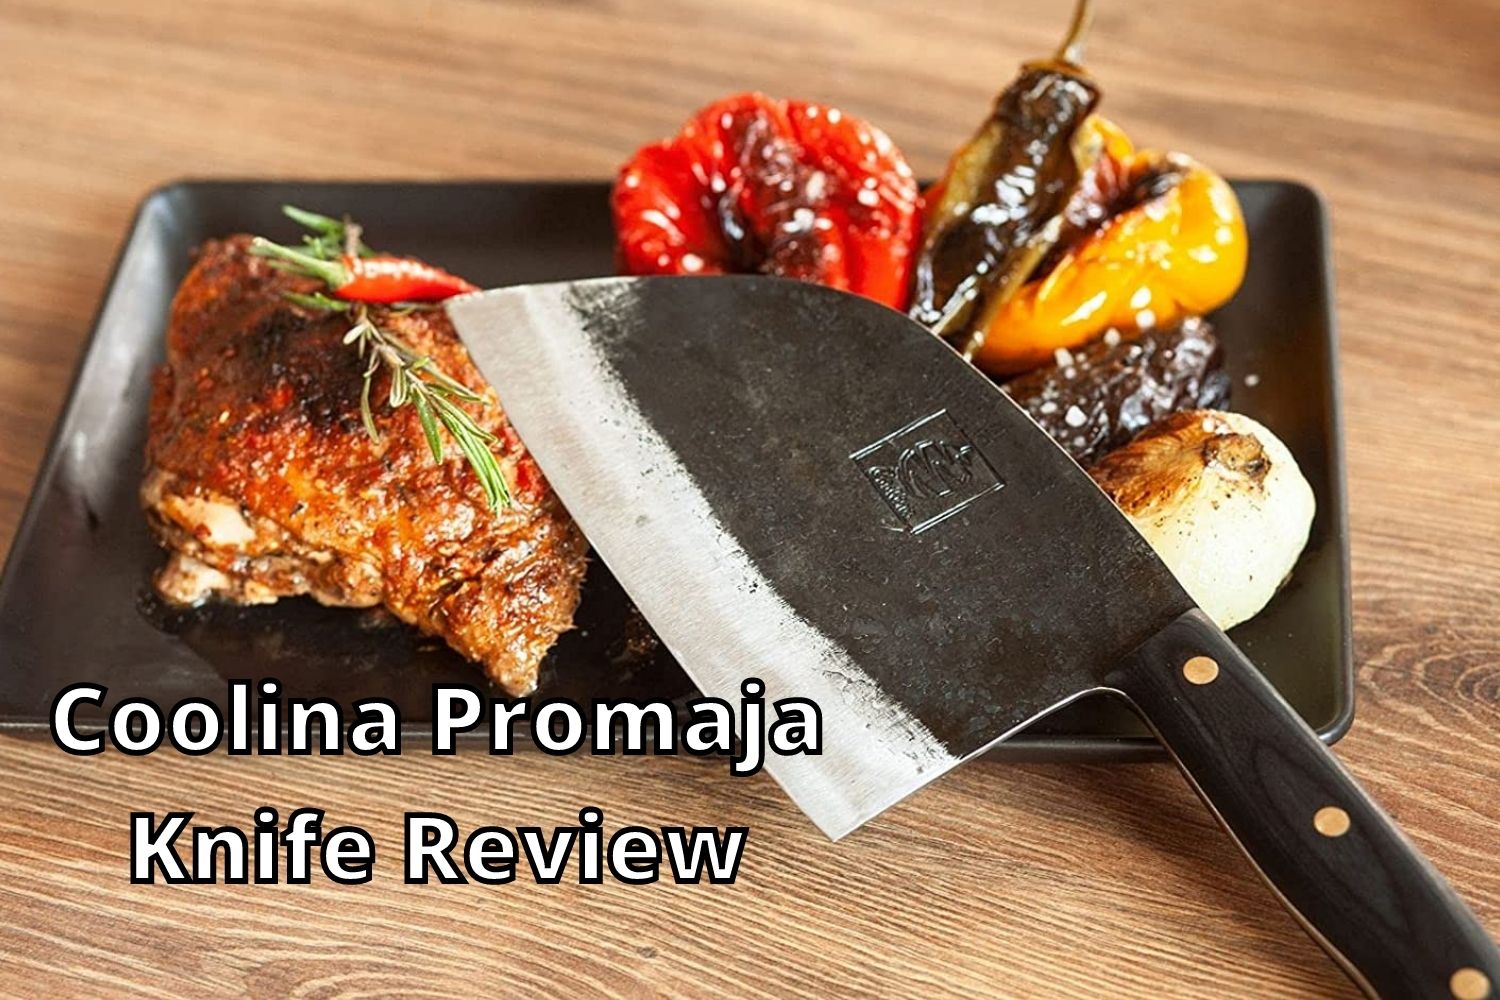 Coolina Promaja Knife Review